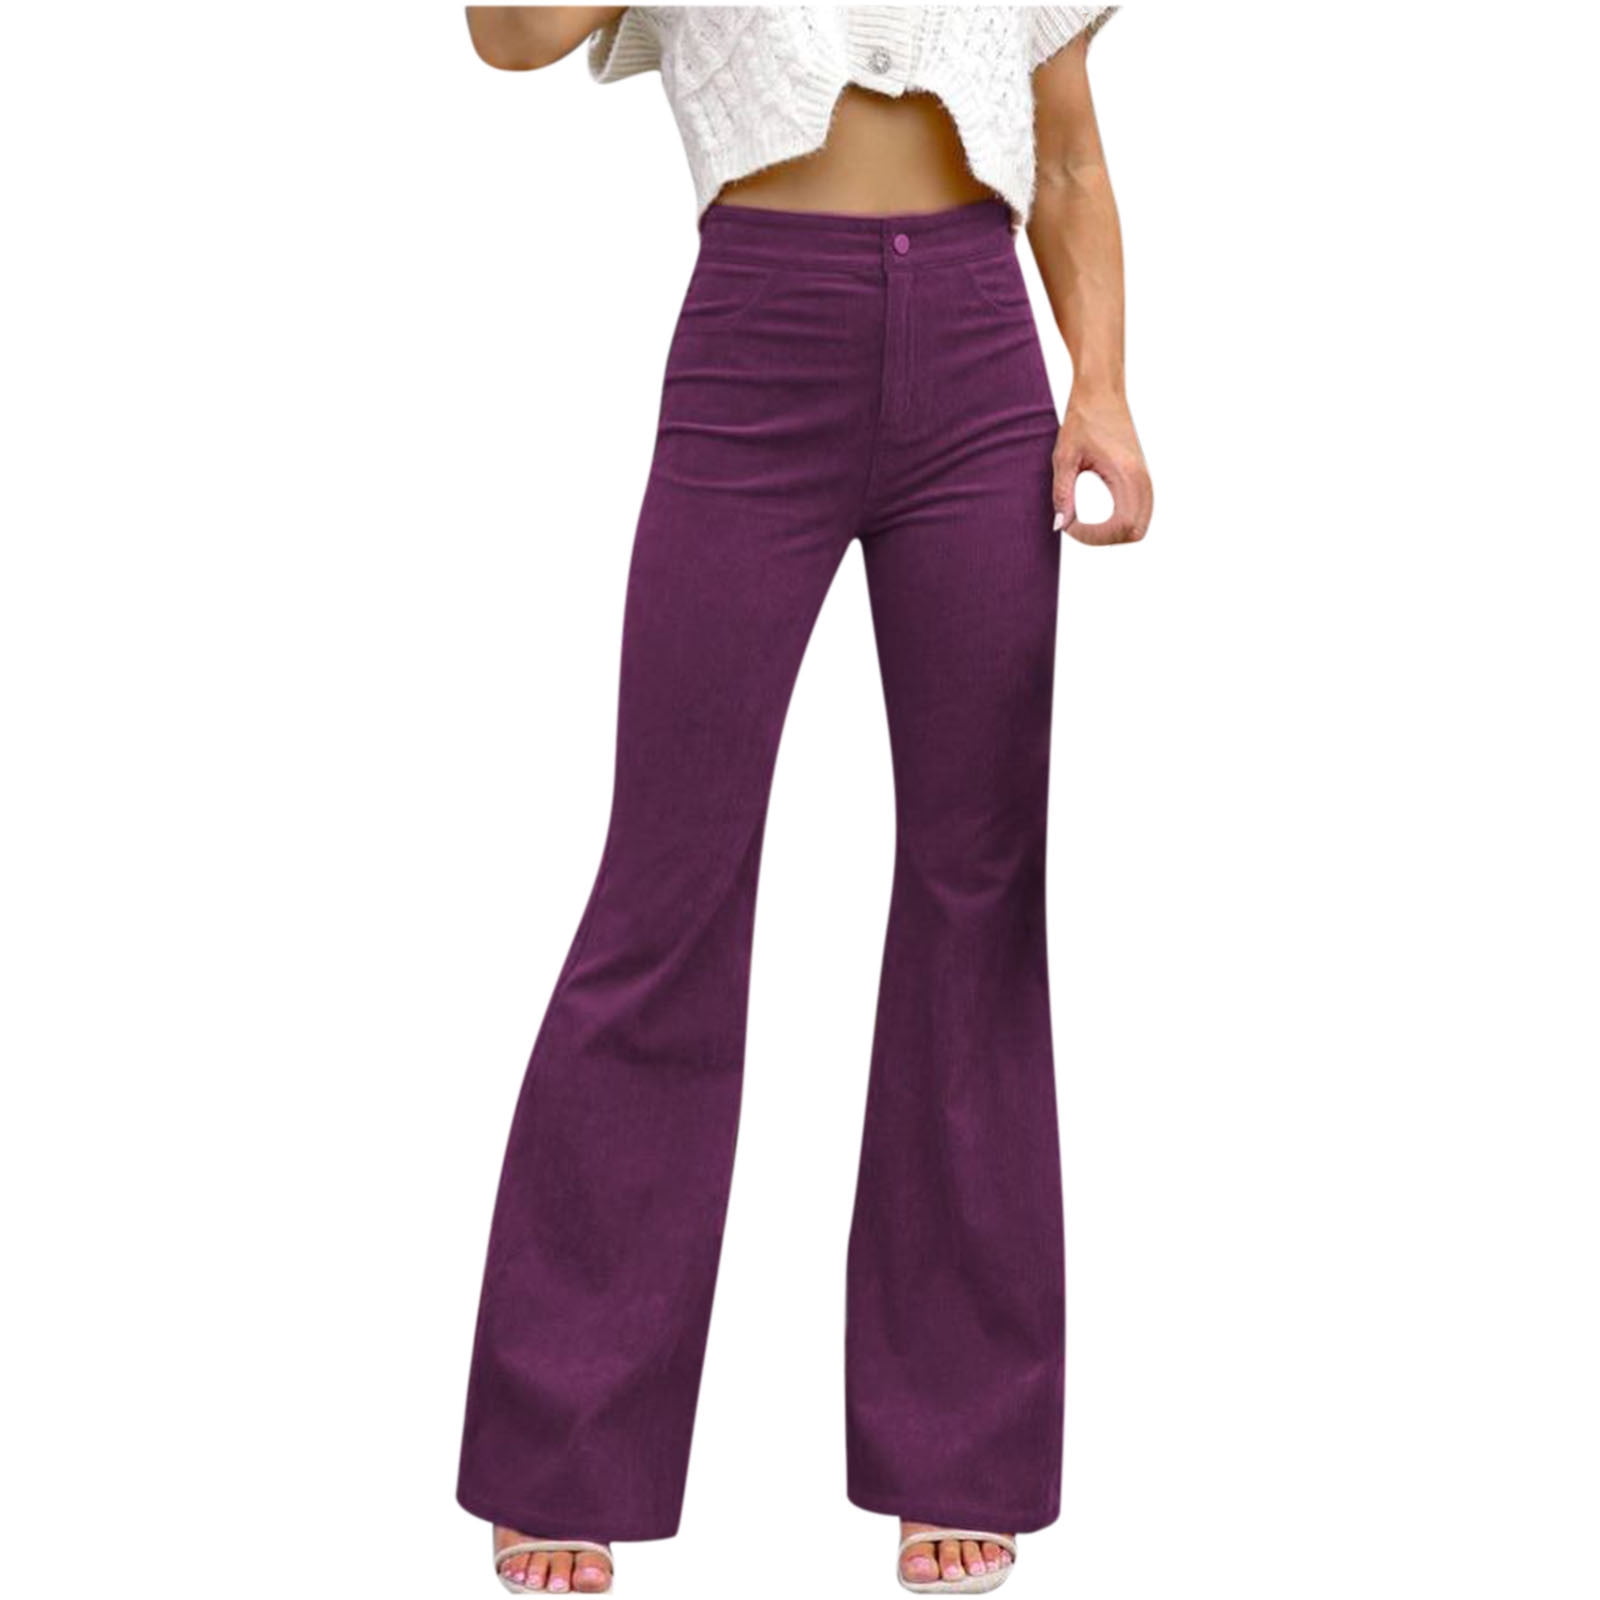 KINPLE Women's Casual Denim Pants Heart Print High Waist Stretchy Bell  Bottom Flared Jeans 